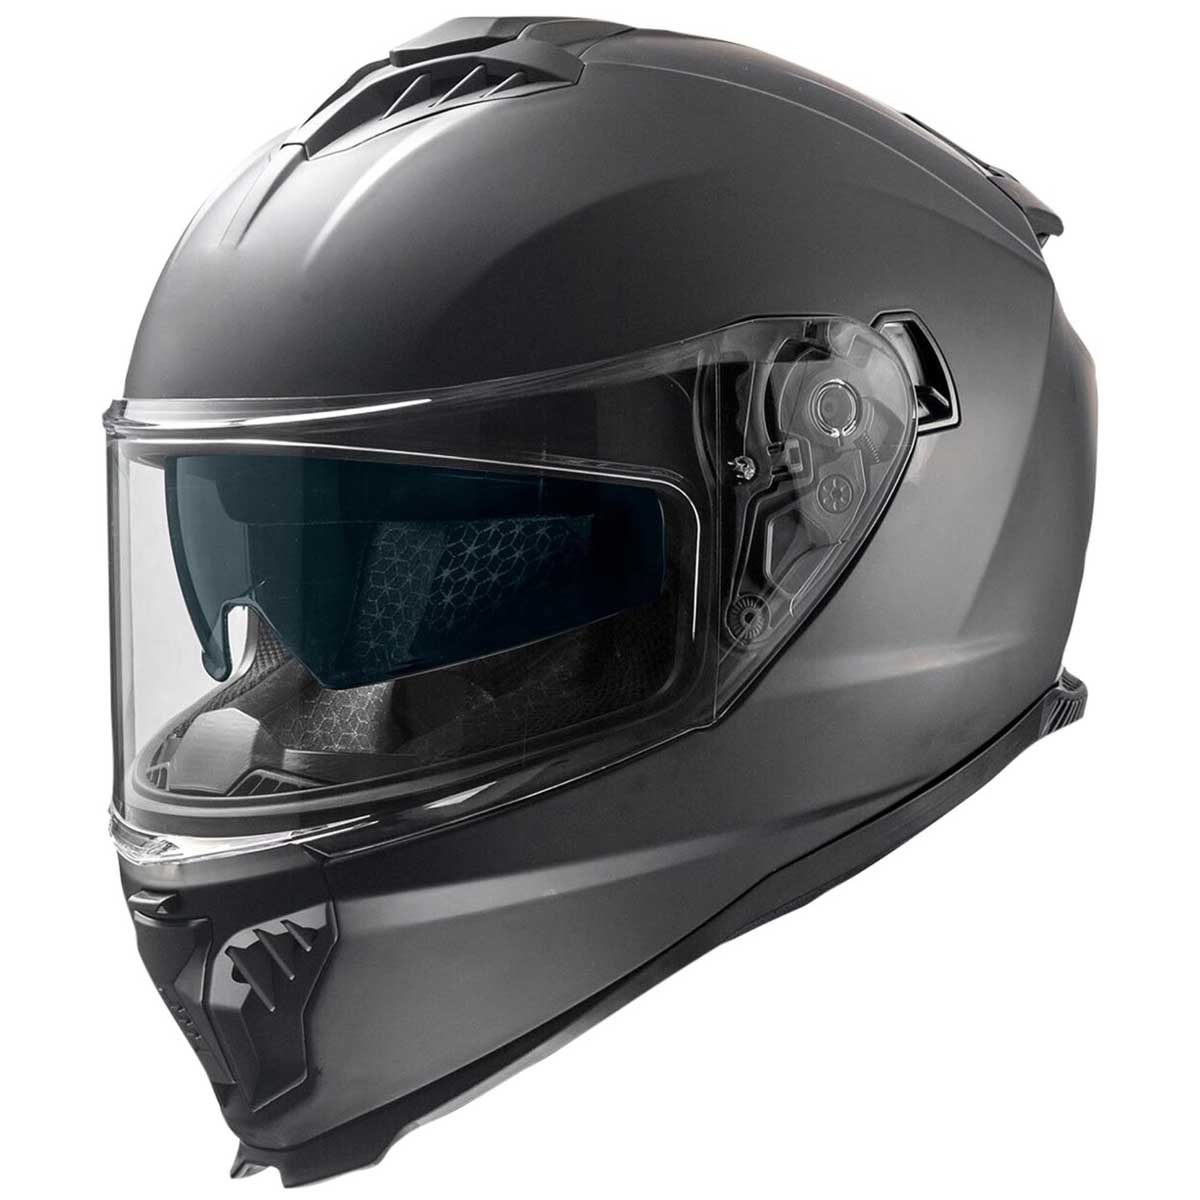 ROCC 390 Helm, schwarz matt